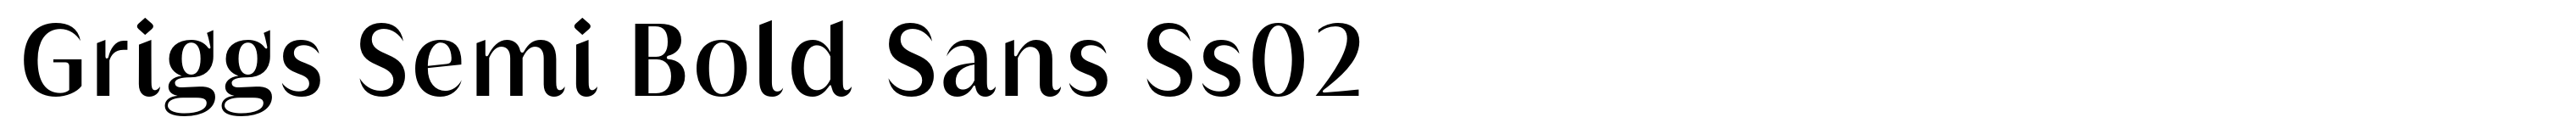 Griggs Semi Bold Sans Ss02